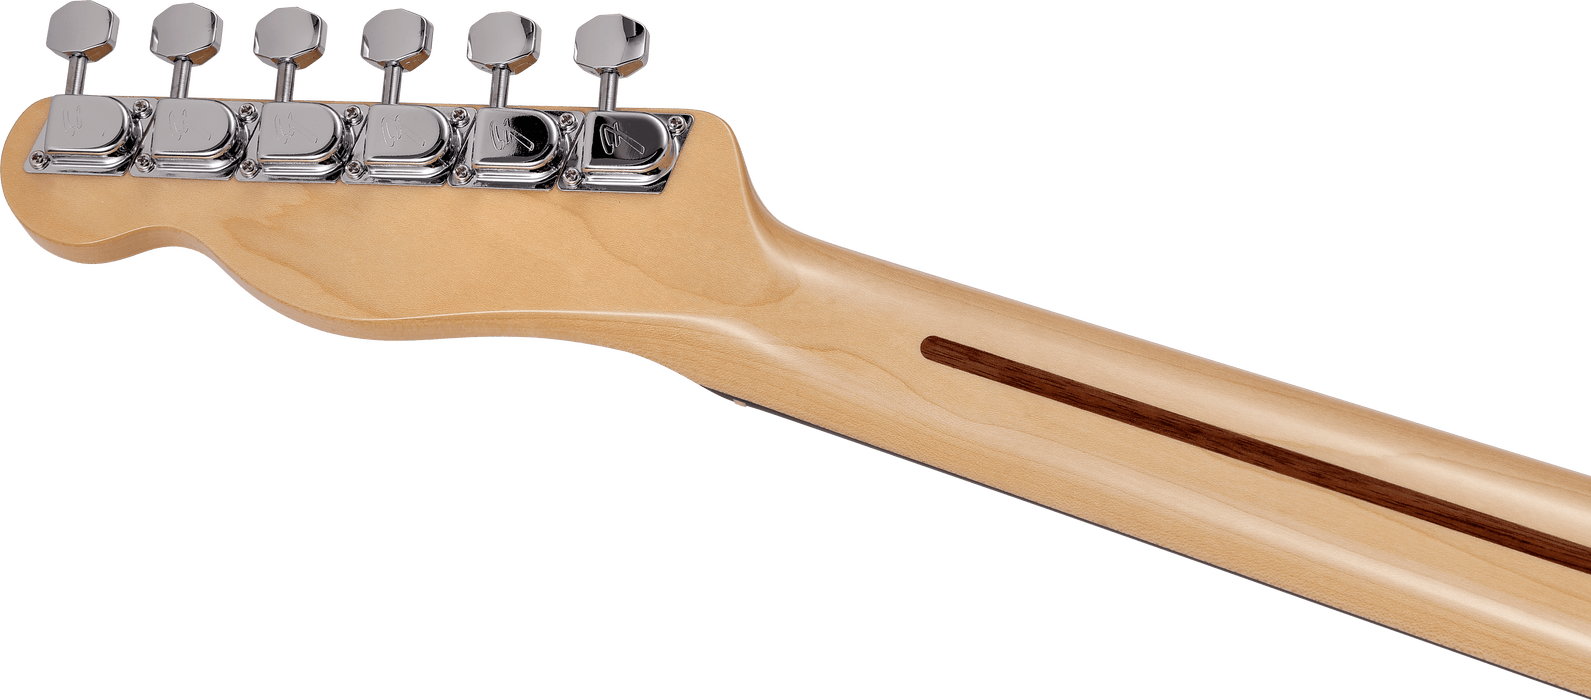 Fender Made in Japan Limited International Color Telecaster Rosewood Fingerboard Maui Blue Electric Guitar With Gig Bag